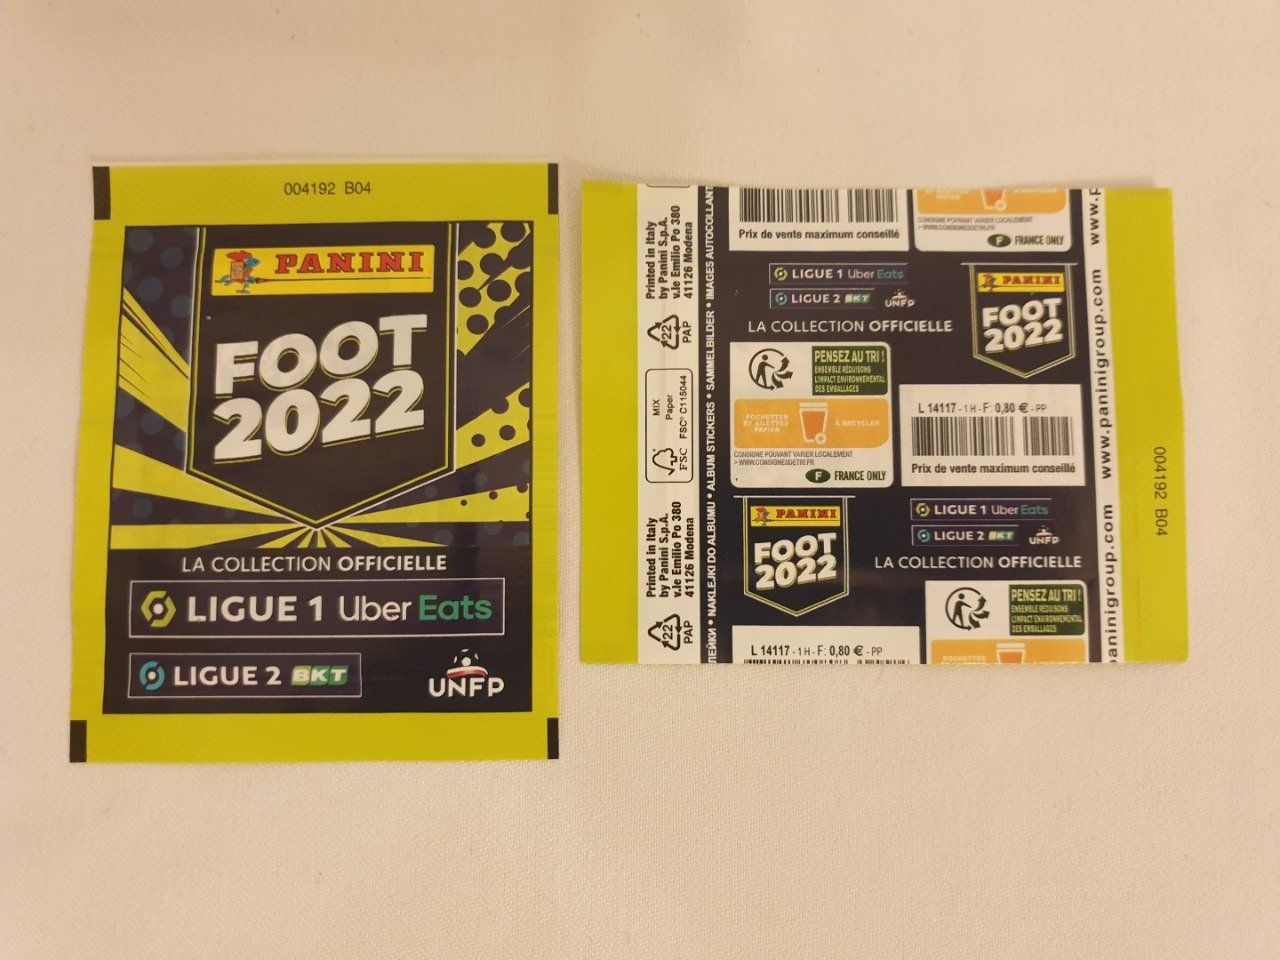 Panini Foot 2022 championnat de France par pochettes extra code